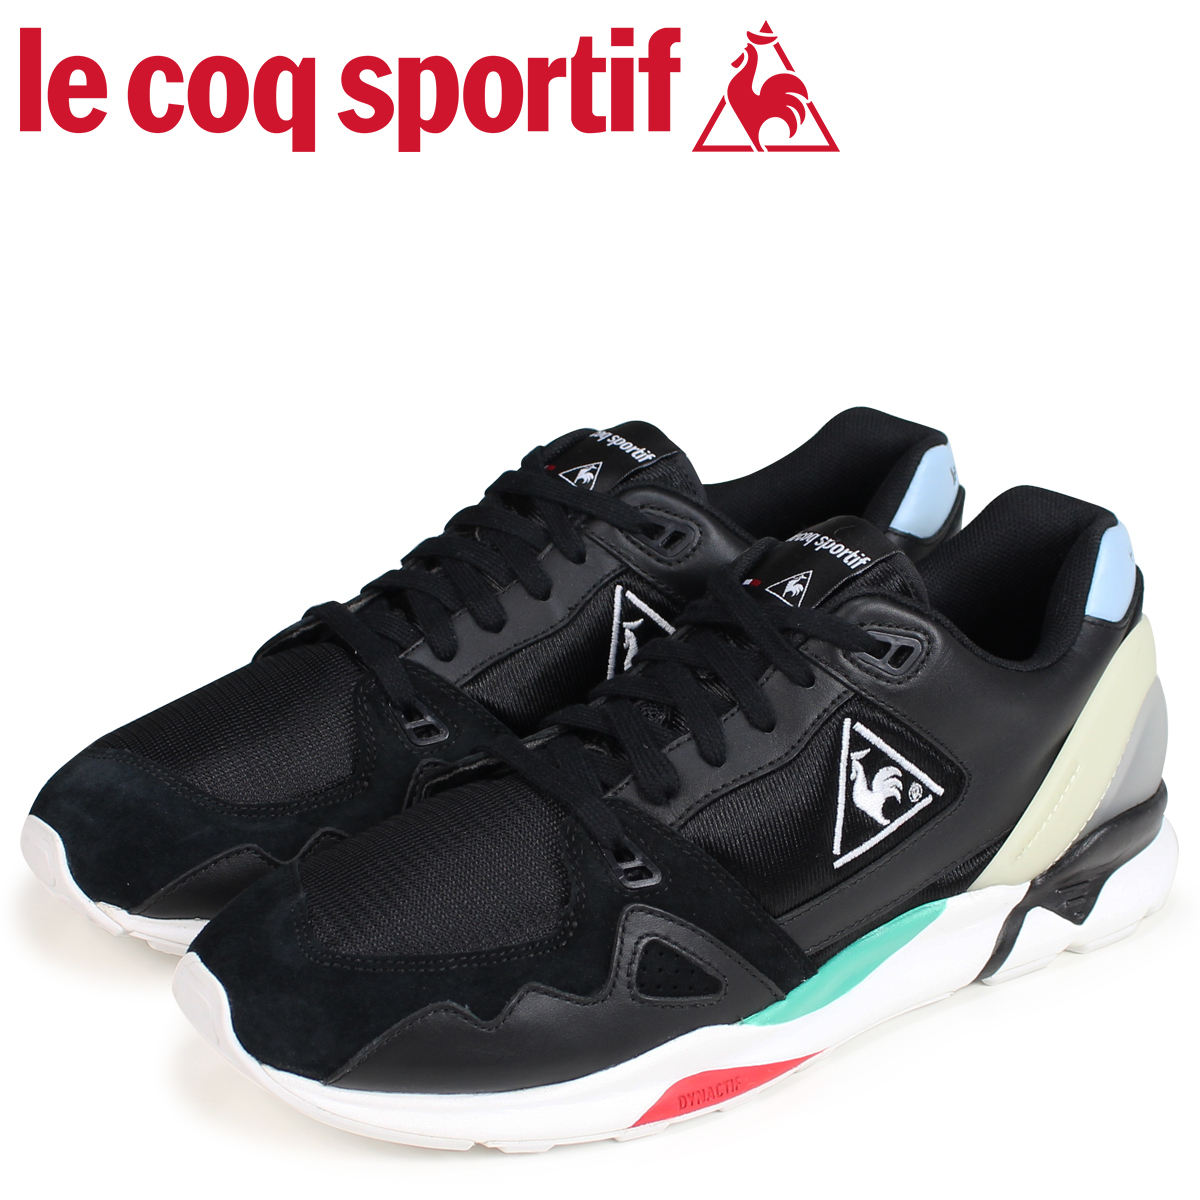 Sugar Online Shop: le coq sportif Le Coq Sportif men sneakers LCS 